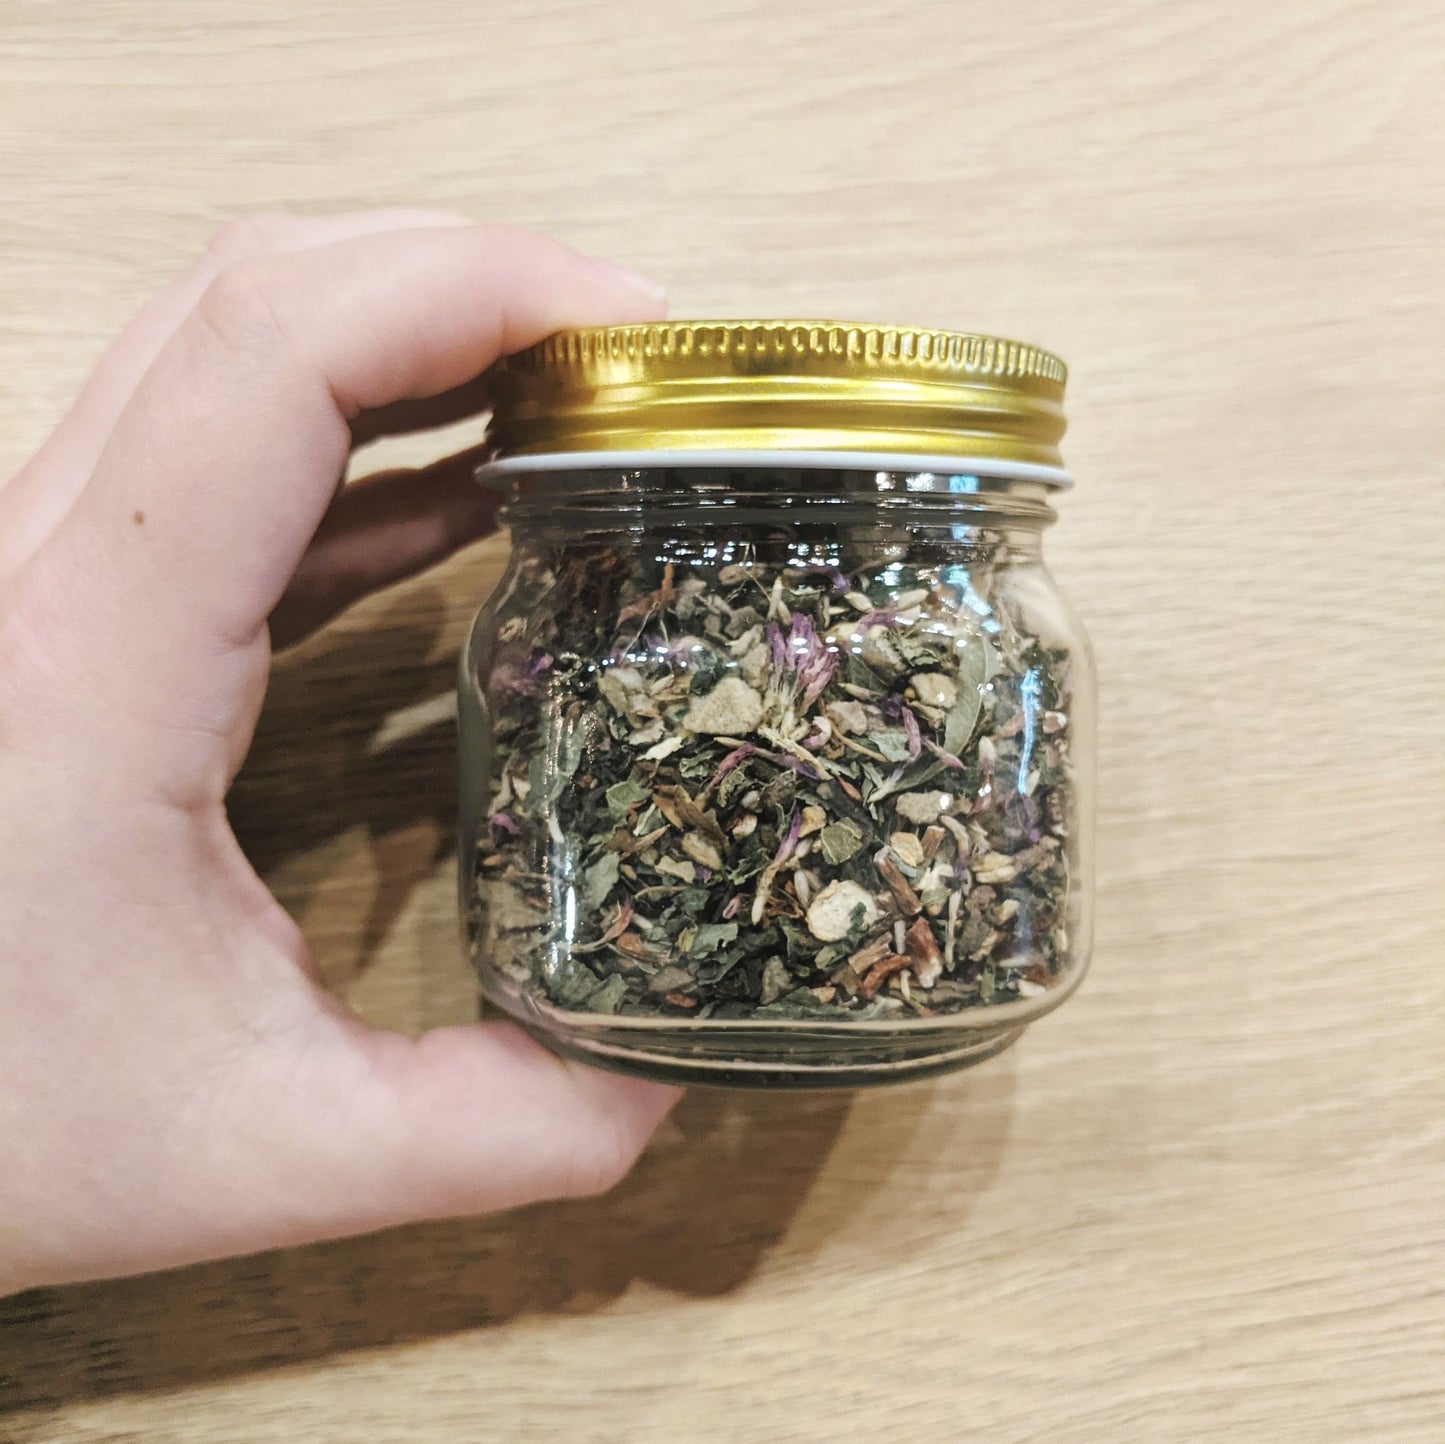 Nettle + Mint Fall Herbal Tea Blend